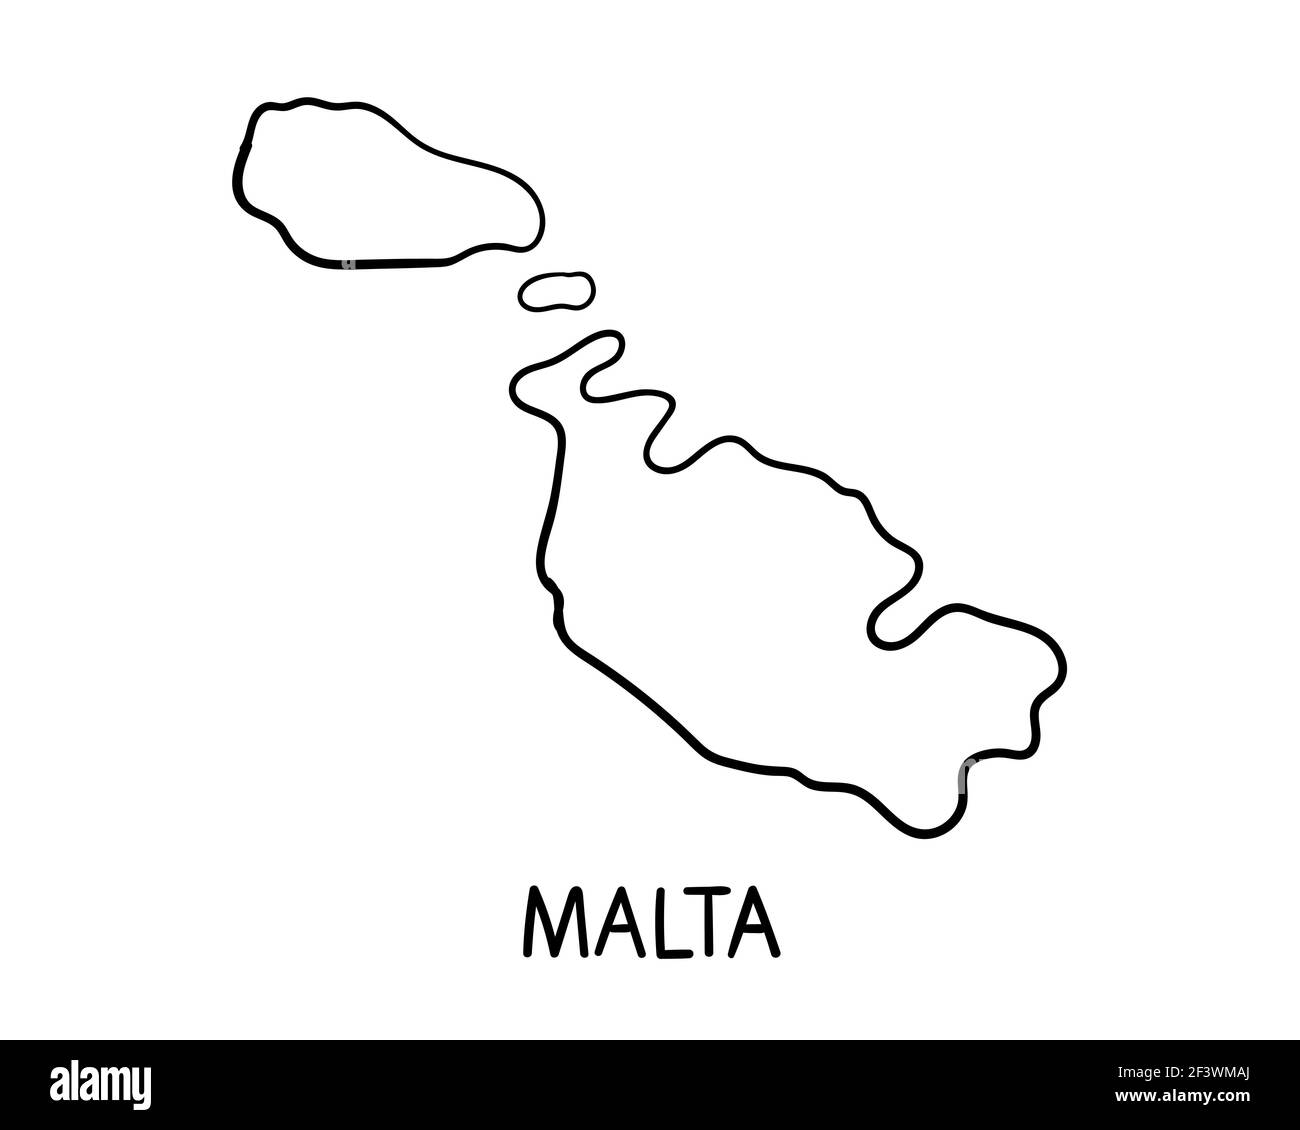 Hand drawn Malta  map illustration Stock Photo